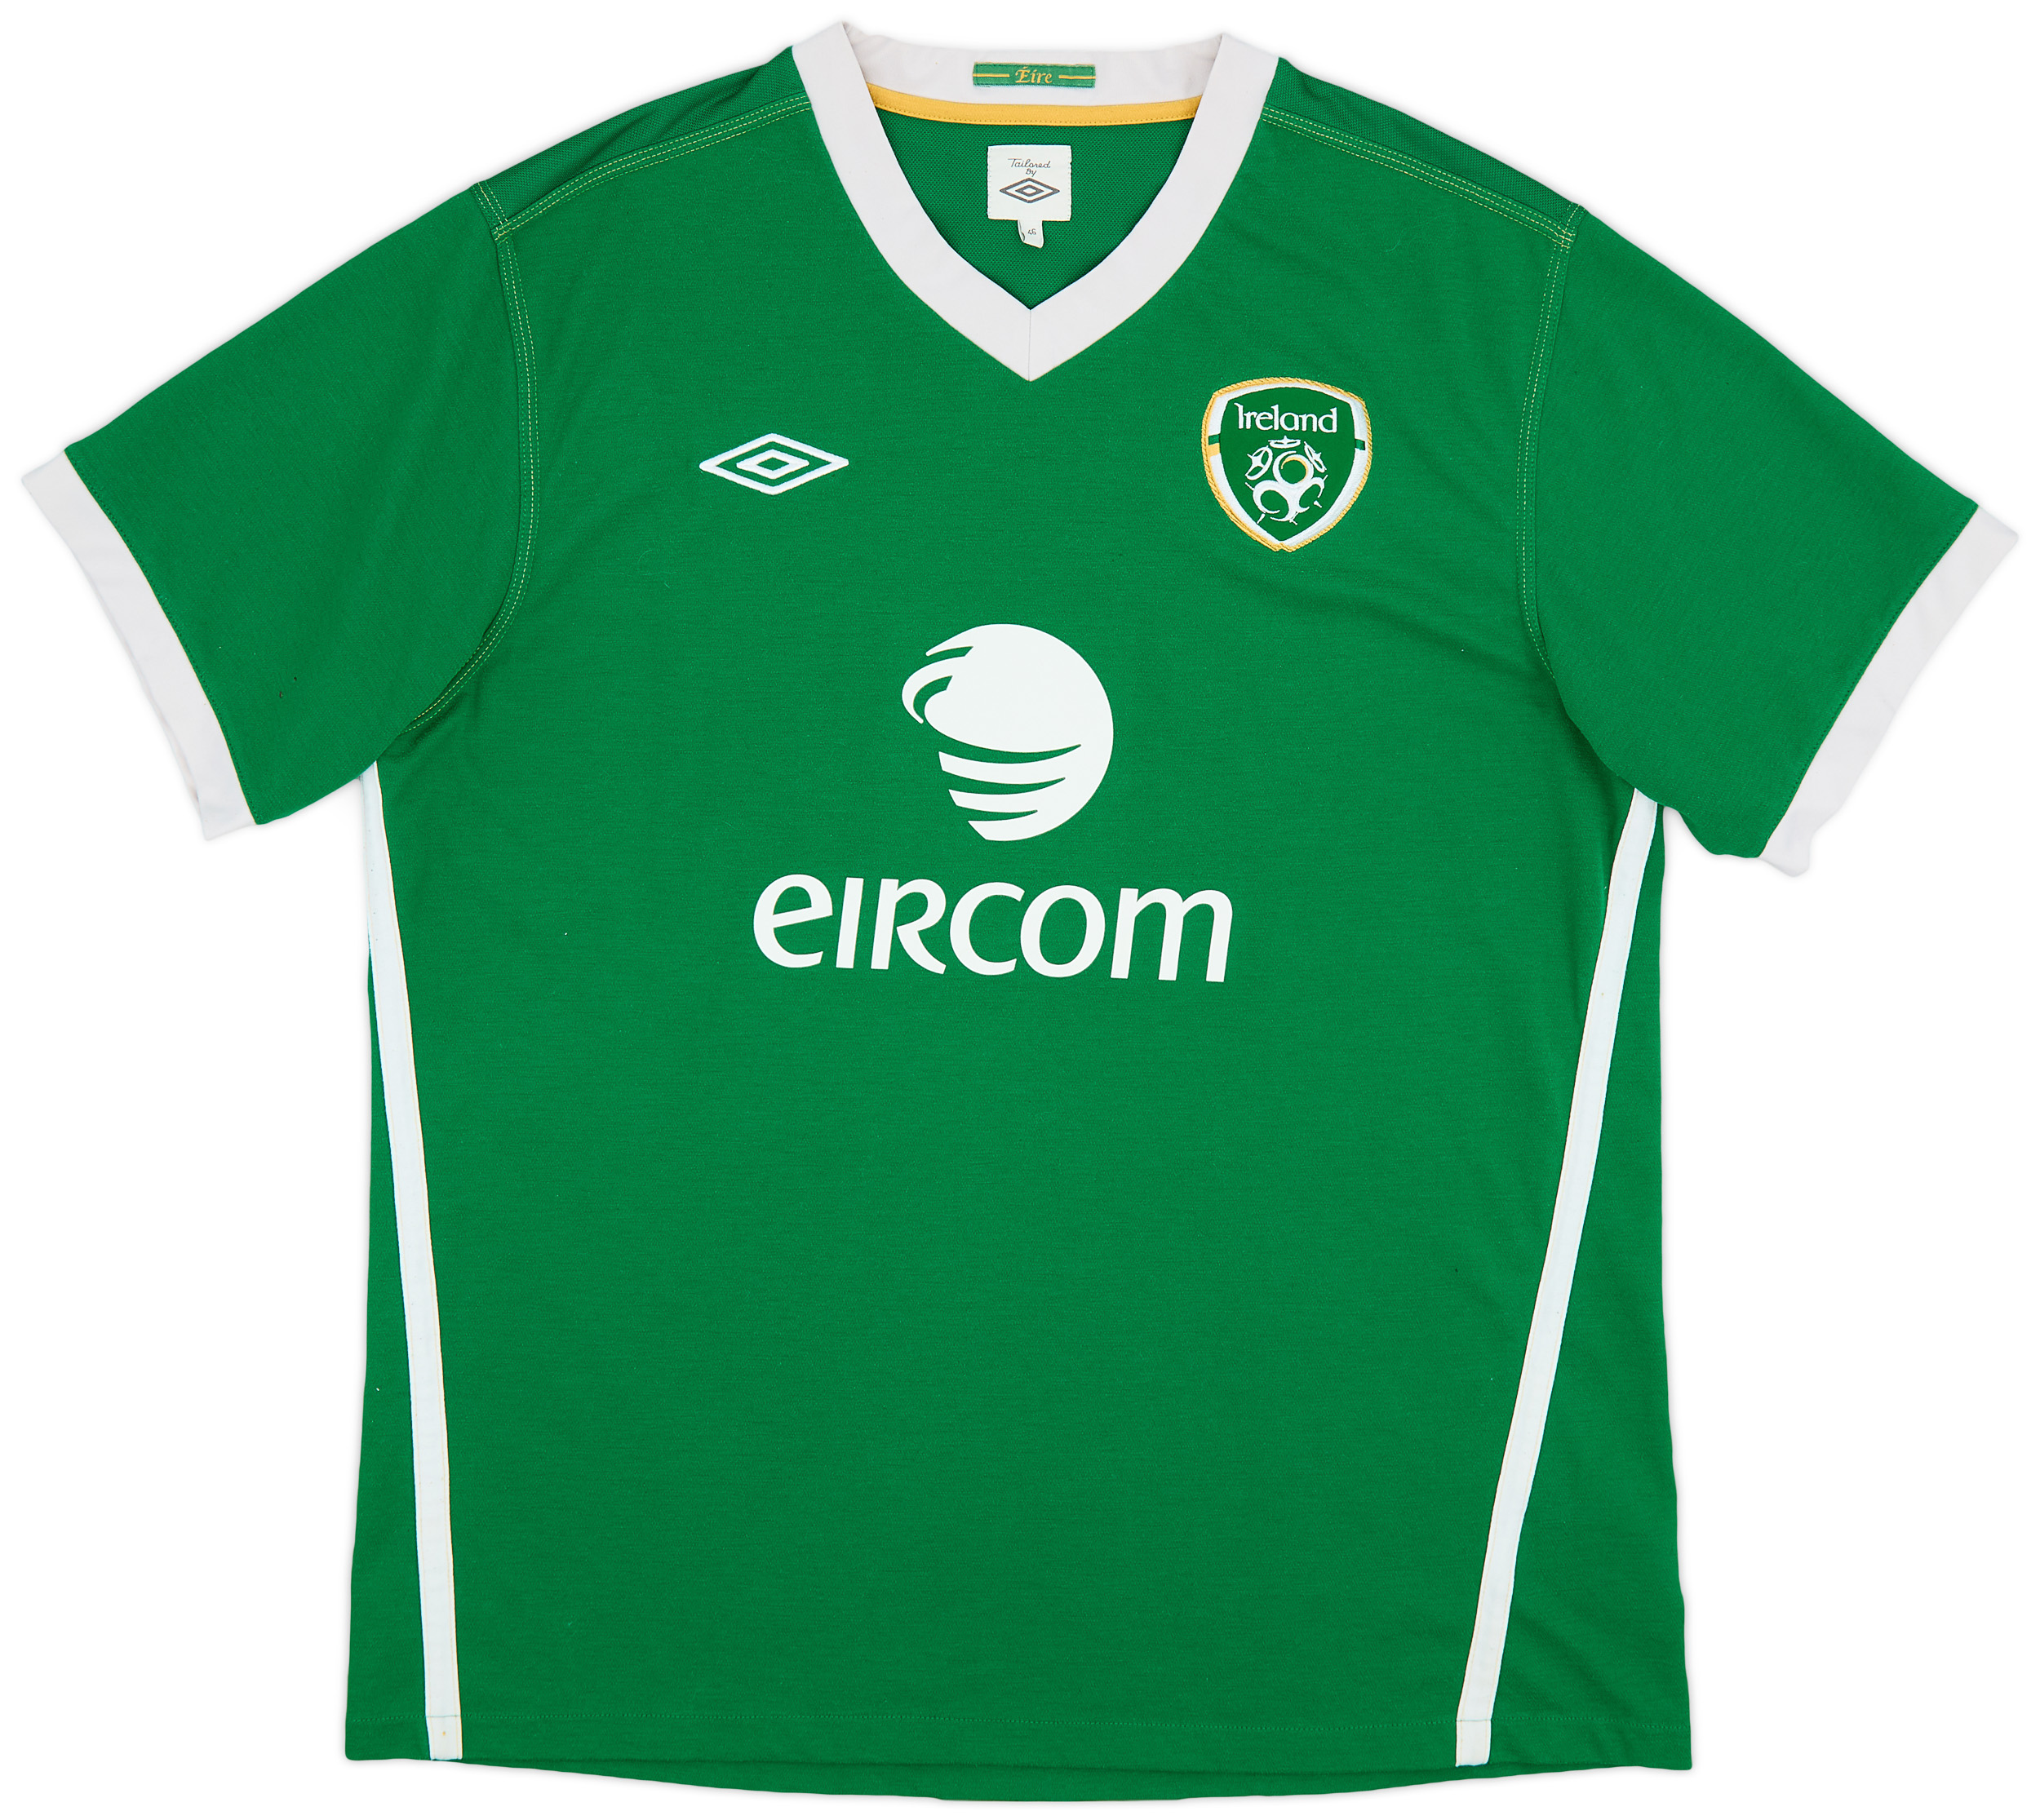 2010-11 Republic of Ireland Home Shirt - 7/10 - ()